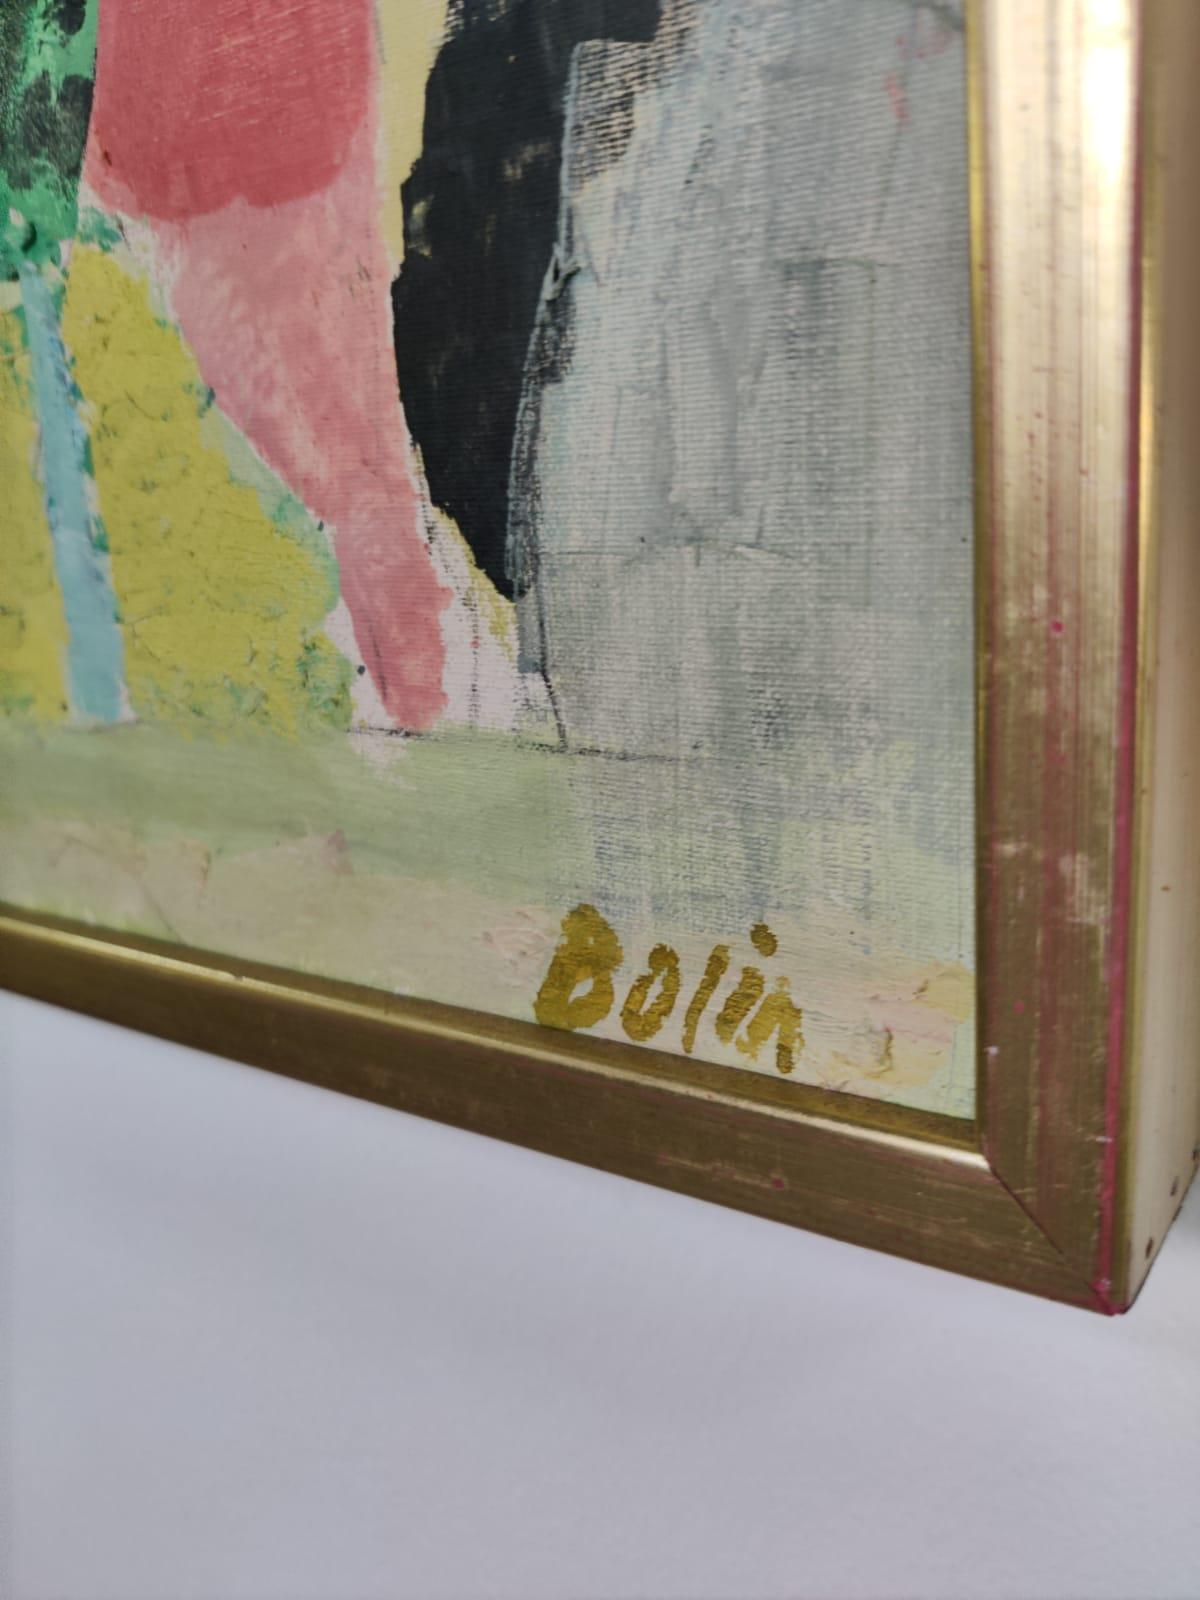 French Gustav Bolin Original Work Signed Gallery Eklund, 1980s